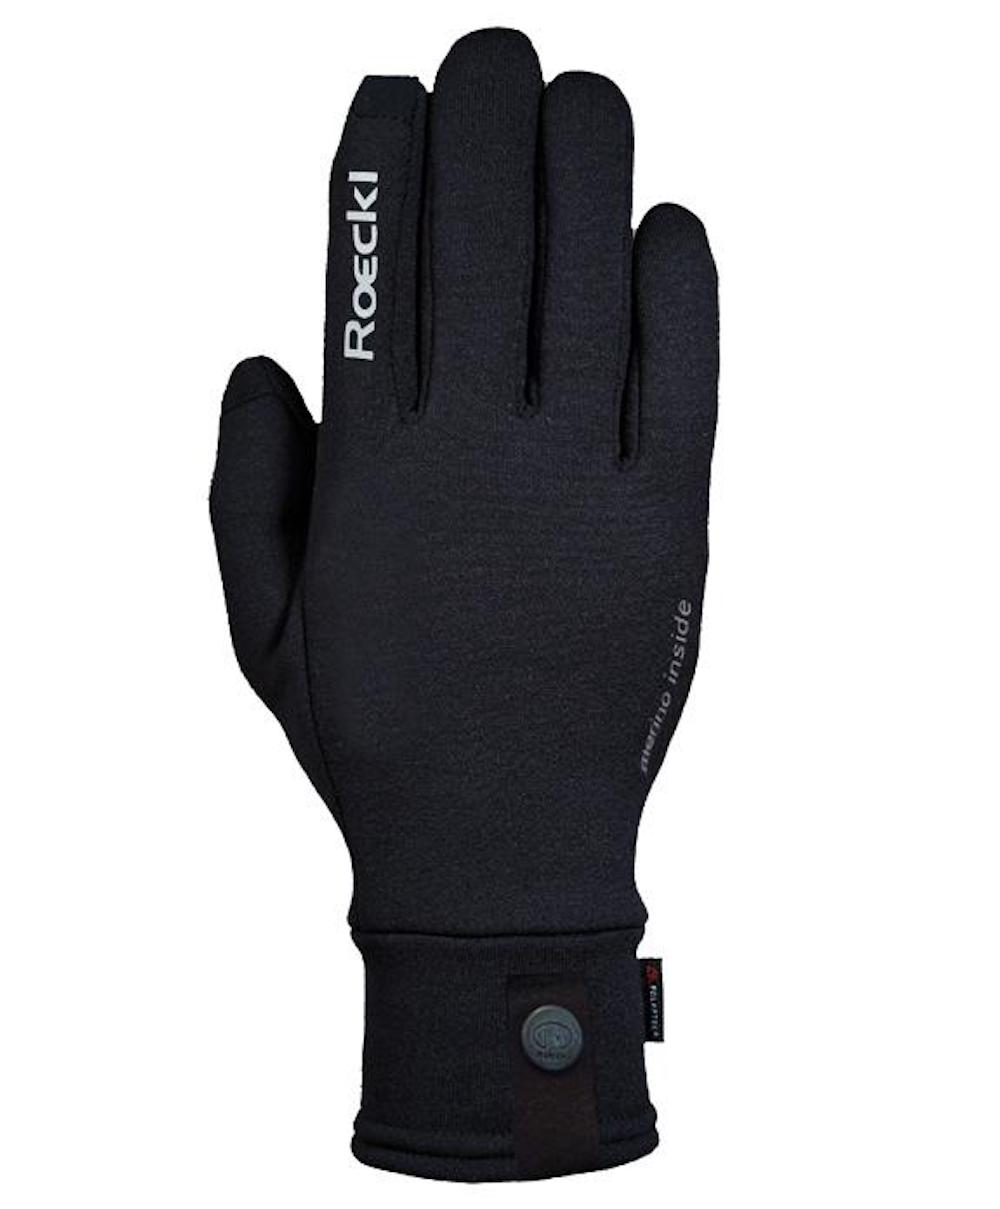 Roeckl - Katari, Handschuhe